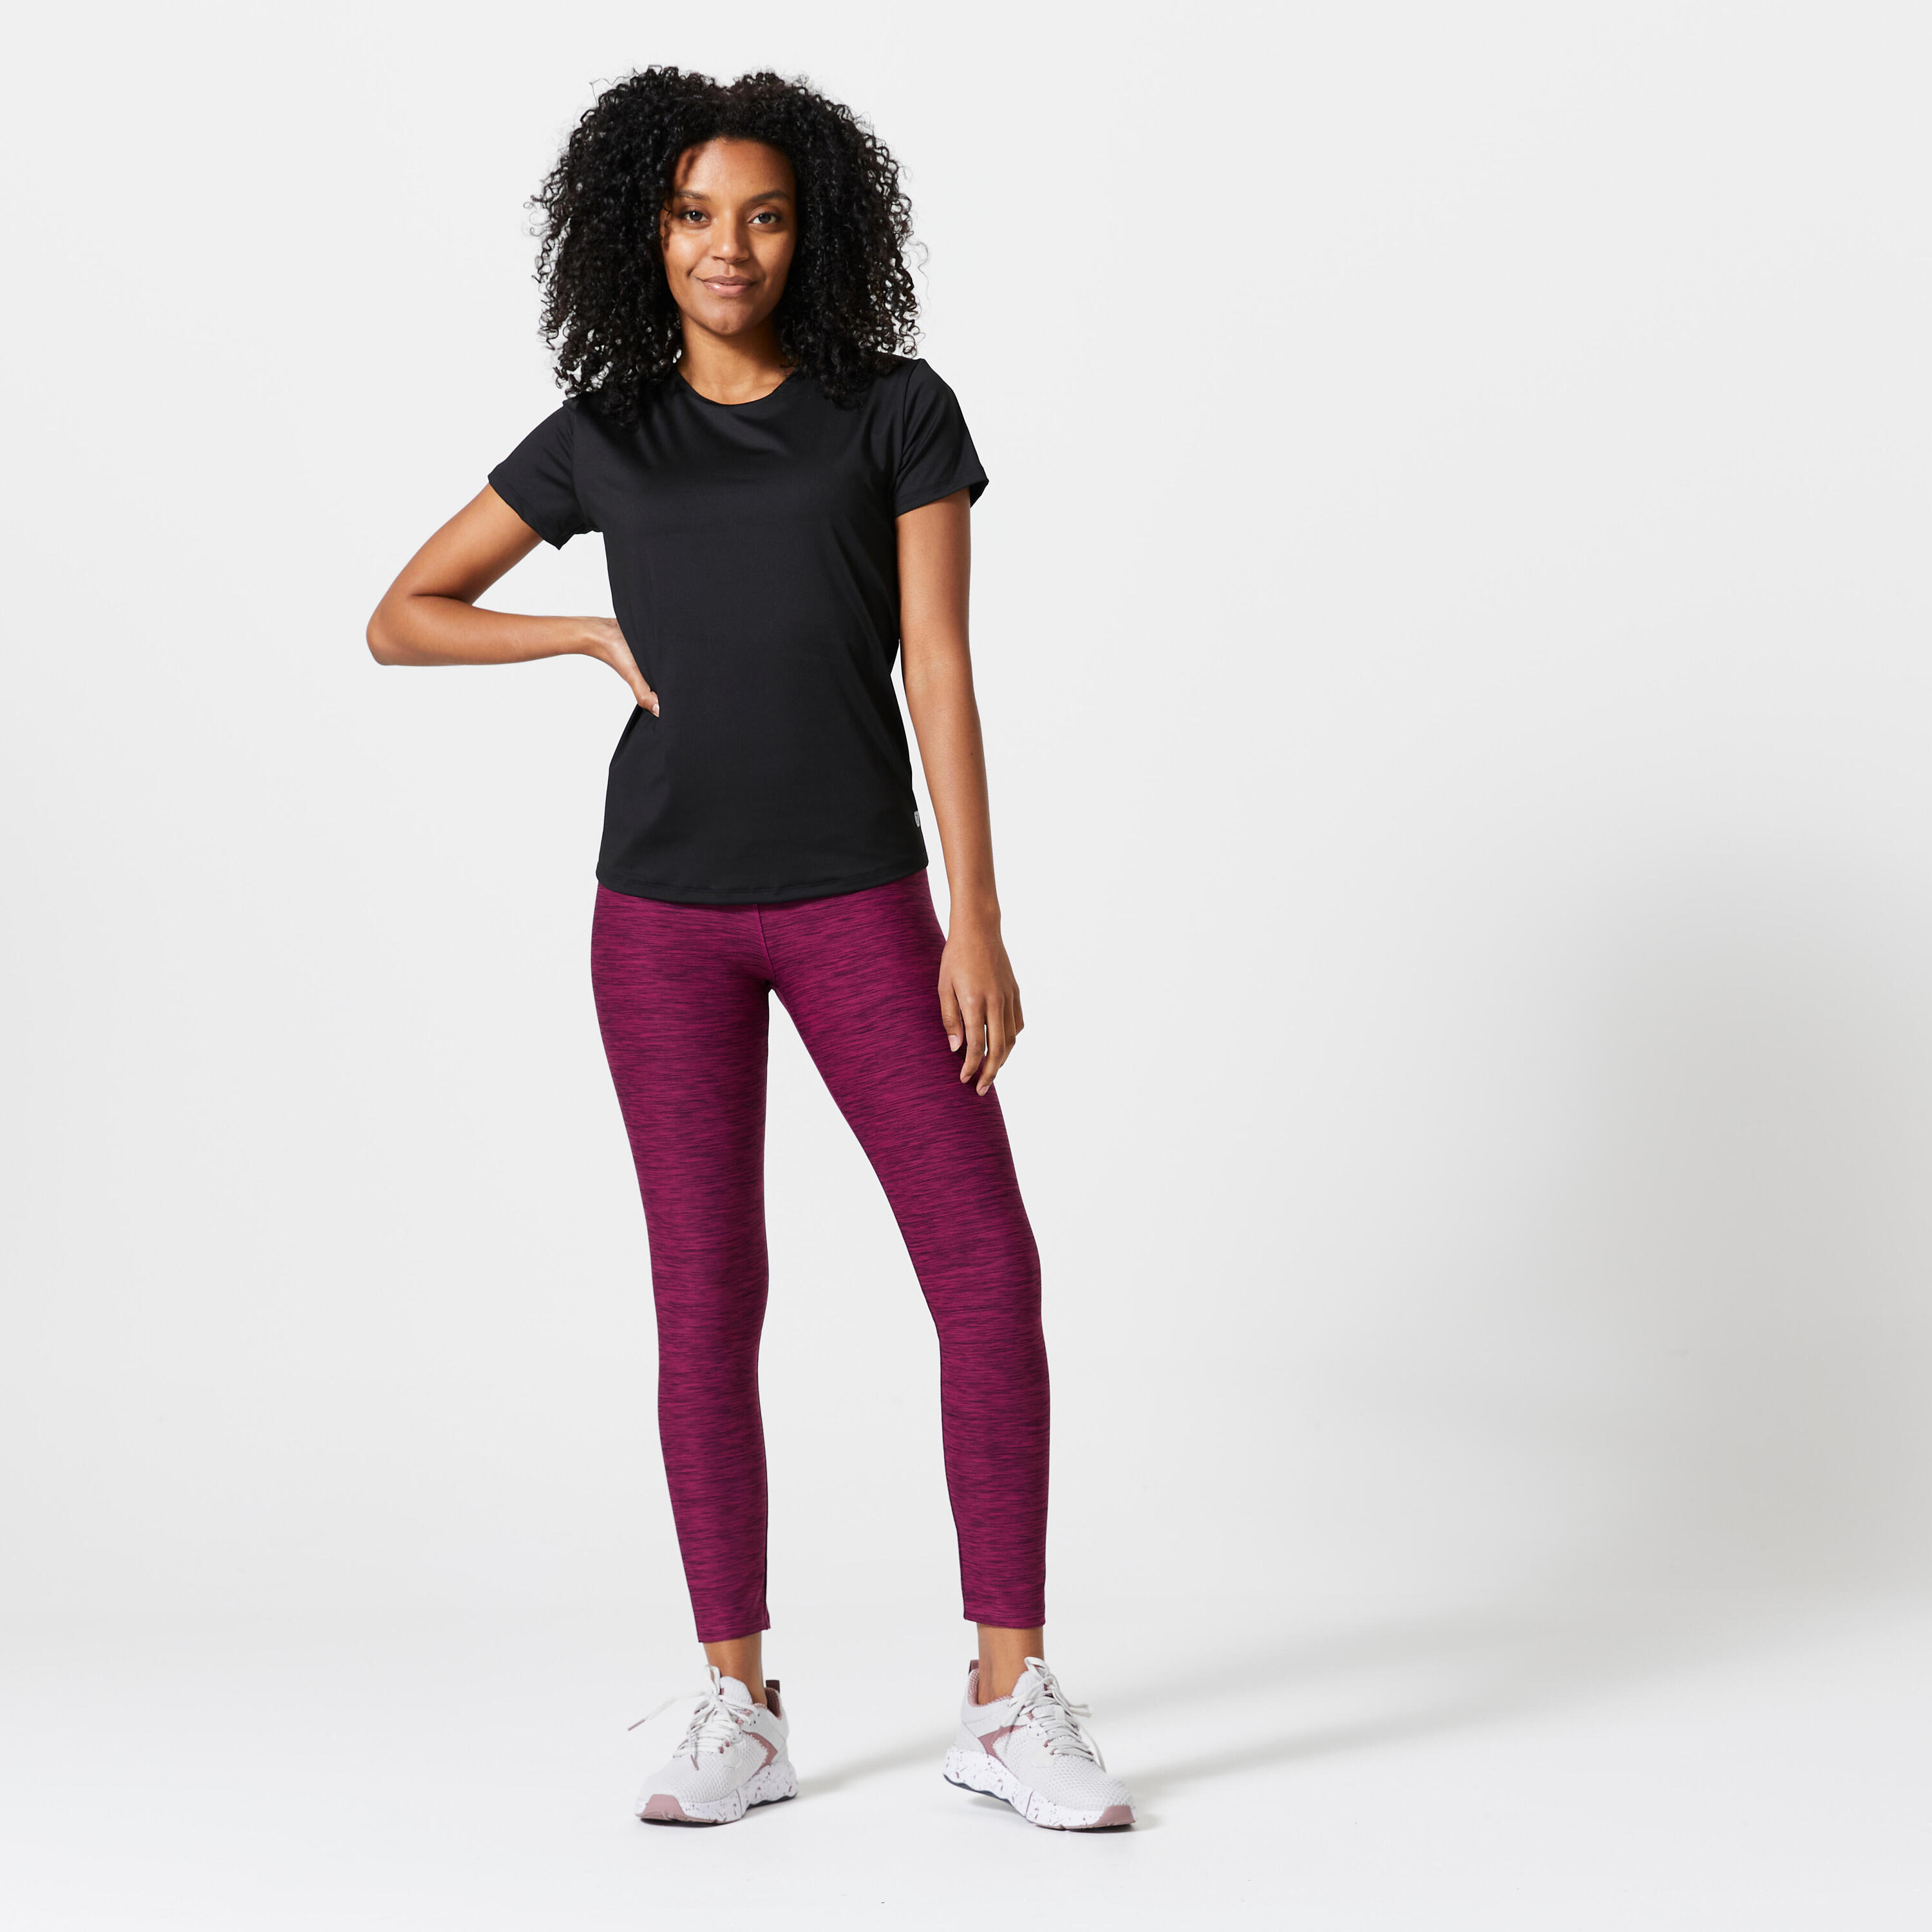 Women's Short-Sleeved Cardio Fitness T-Shirt - Black 2/5